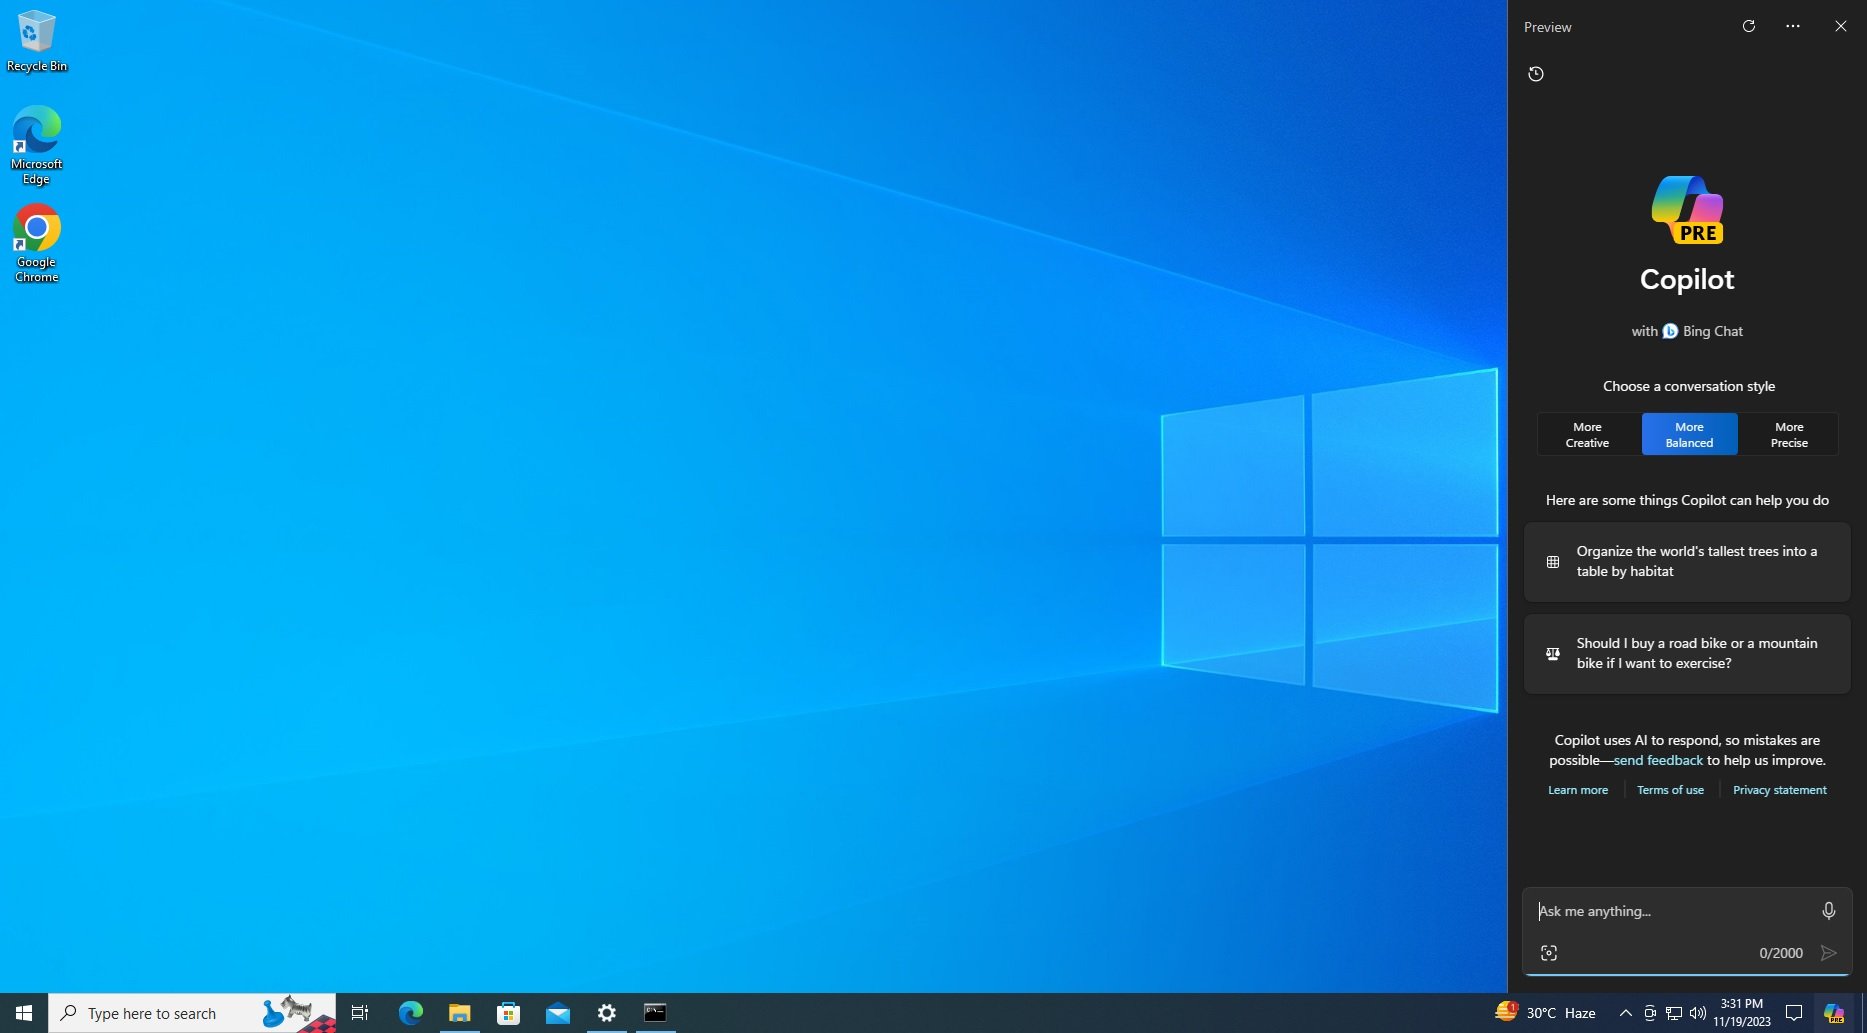 How to enable Microsoft Copilot on Windows 10